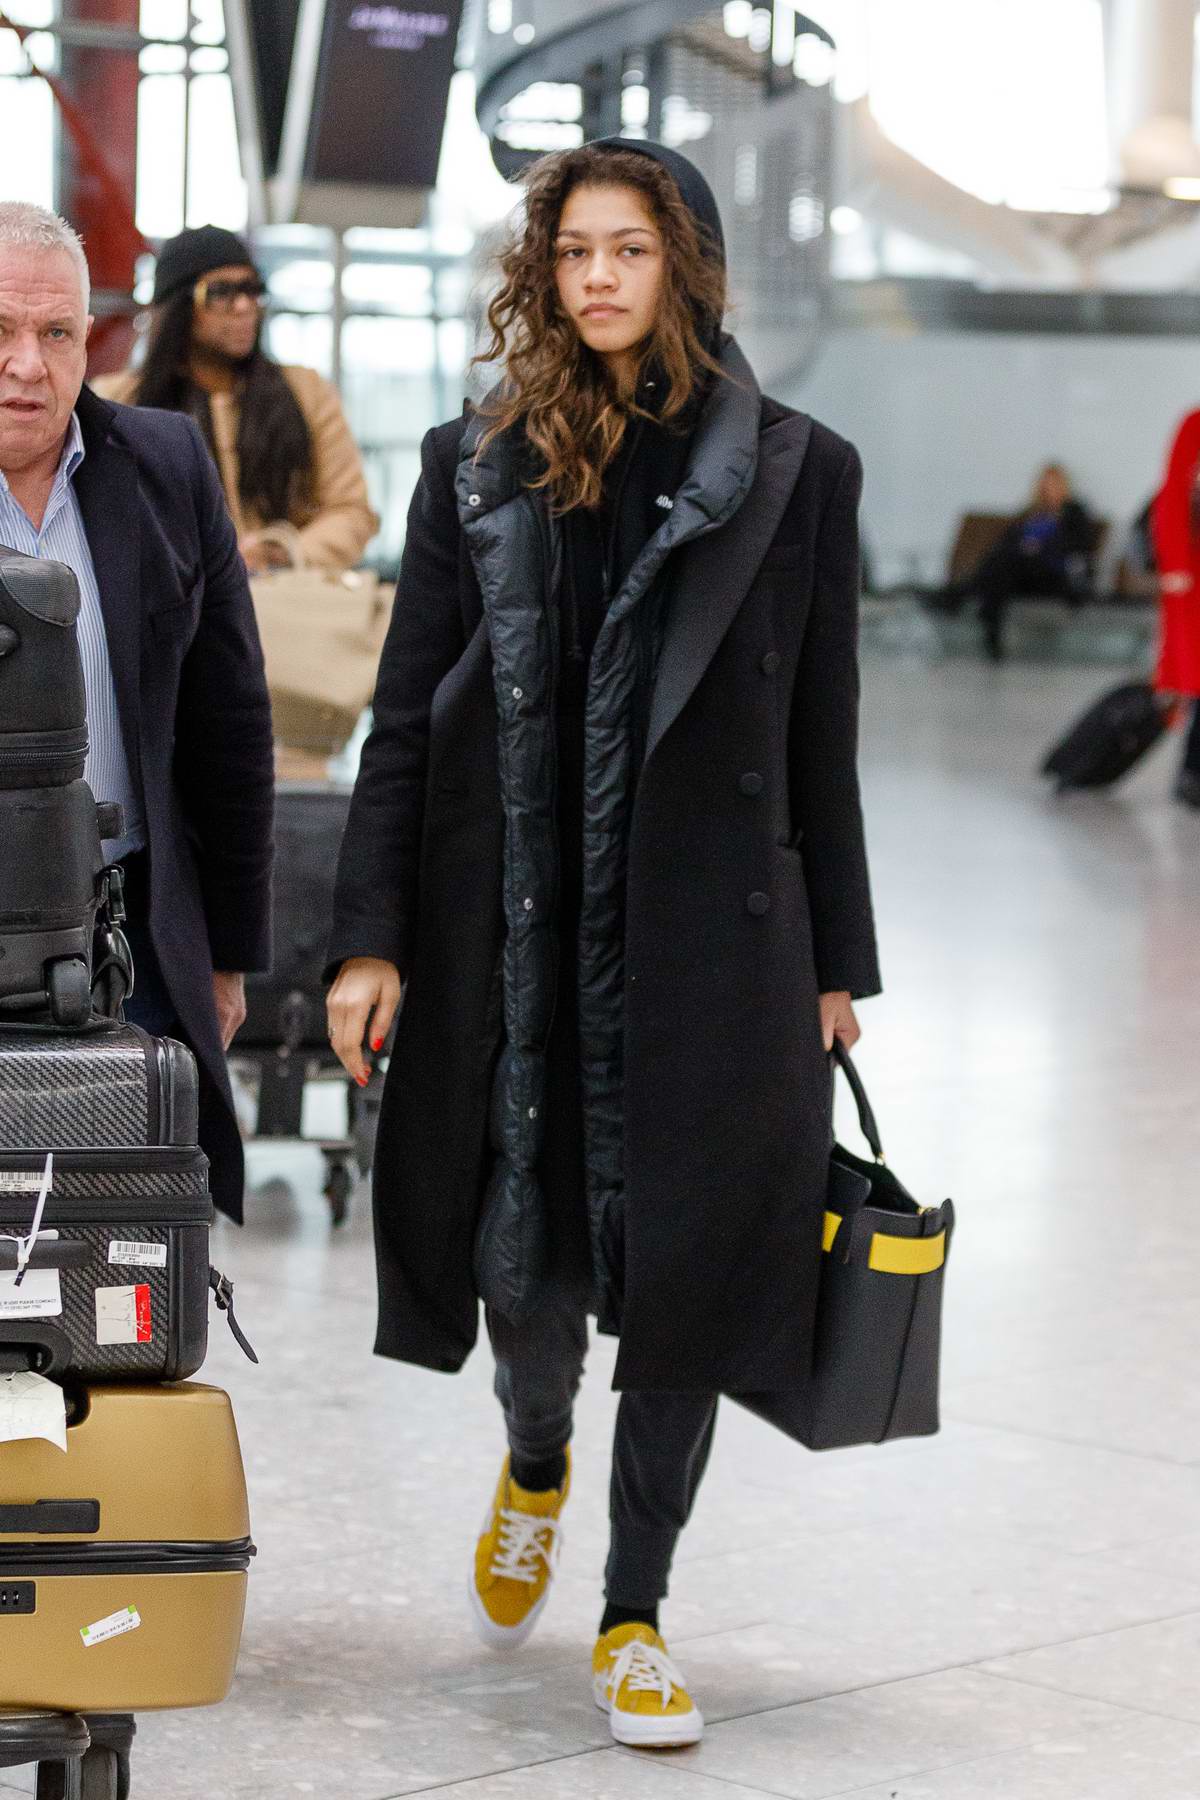 Zendaya arriving at the airport in New York yesterday : r/TomdayaUpdates